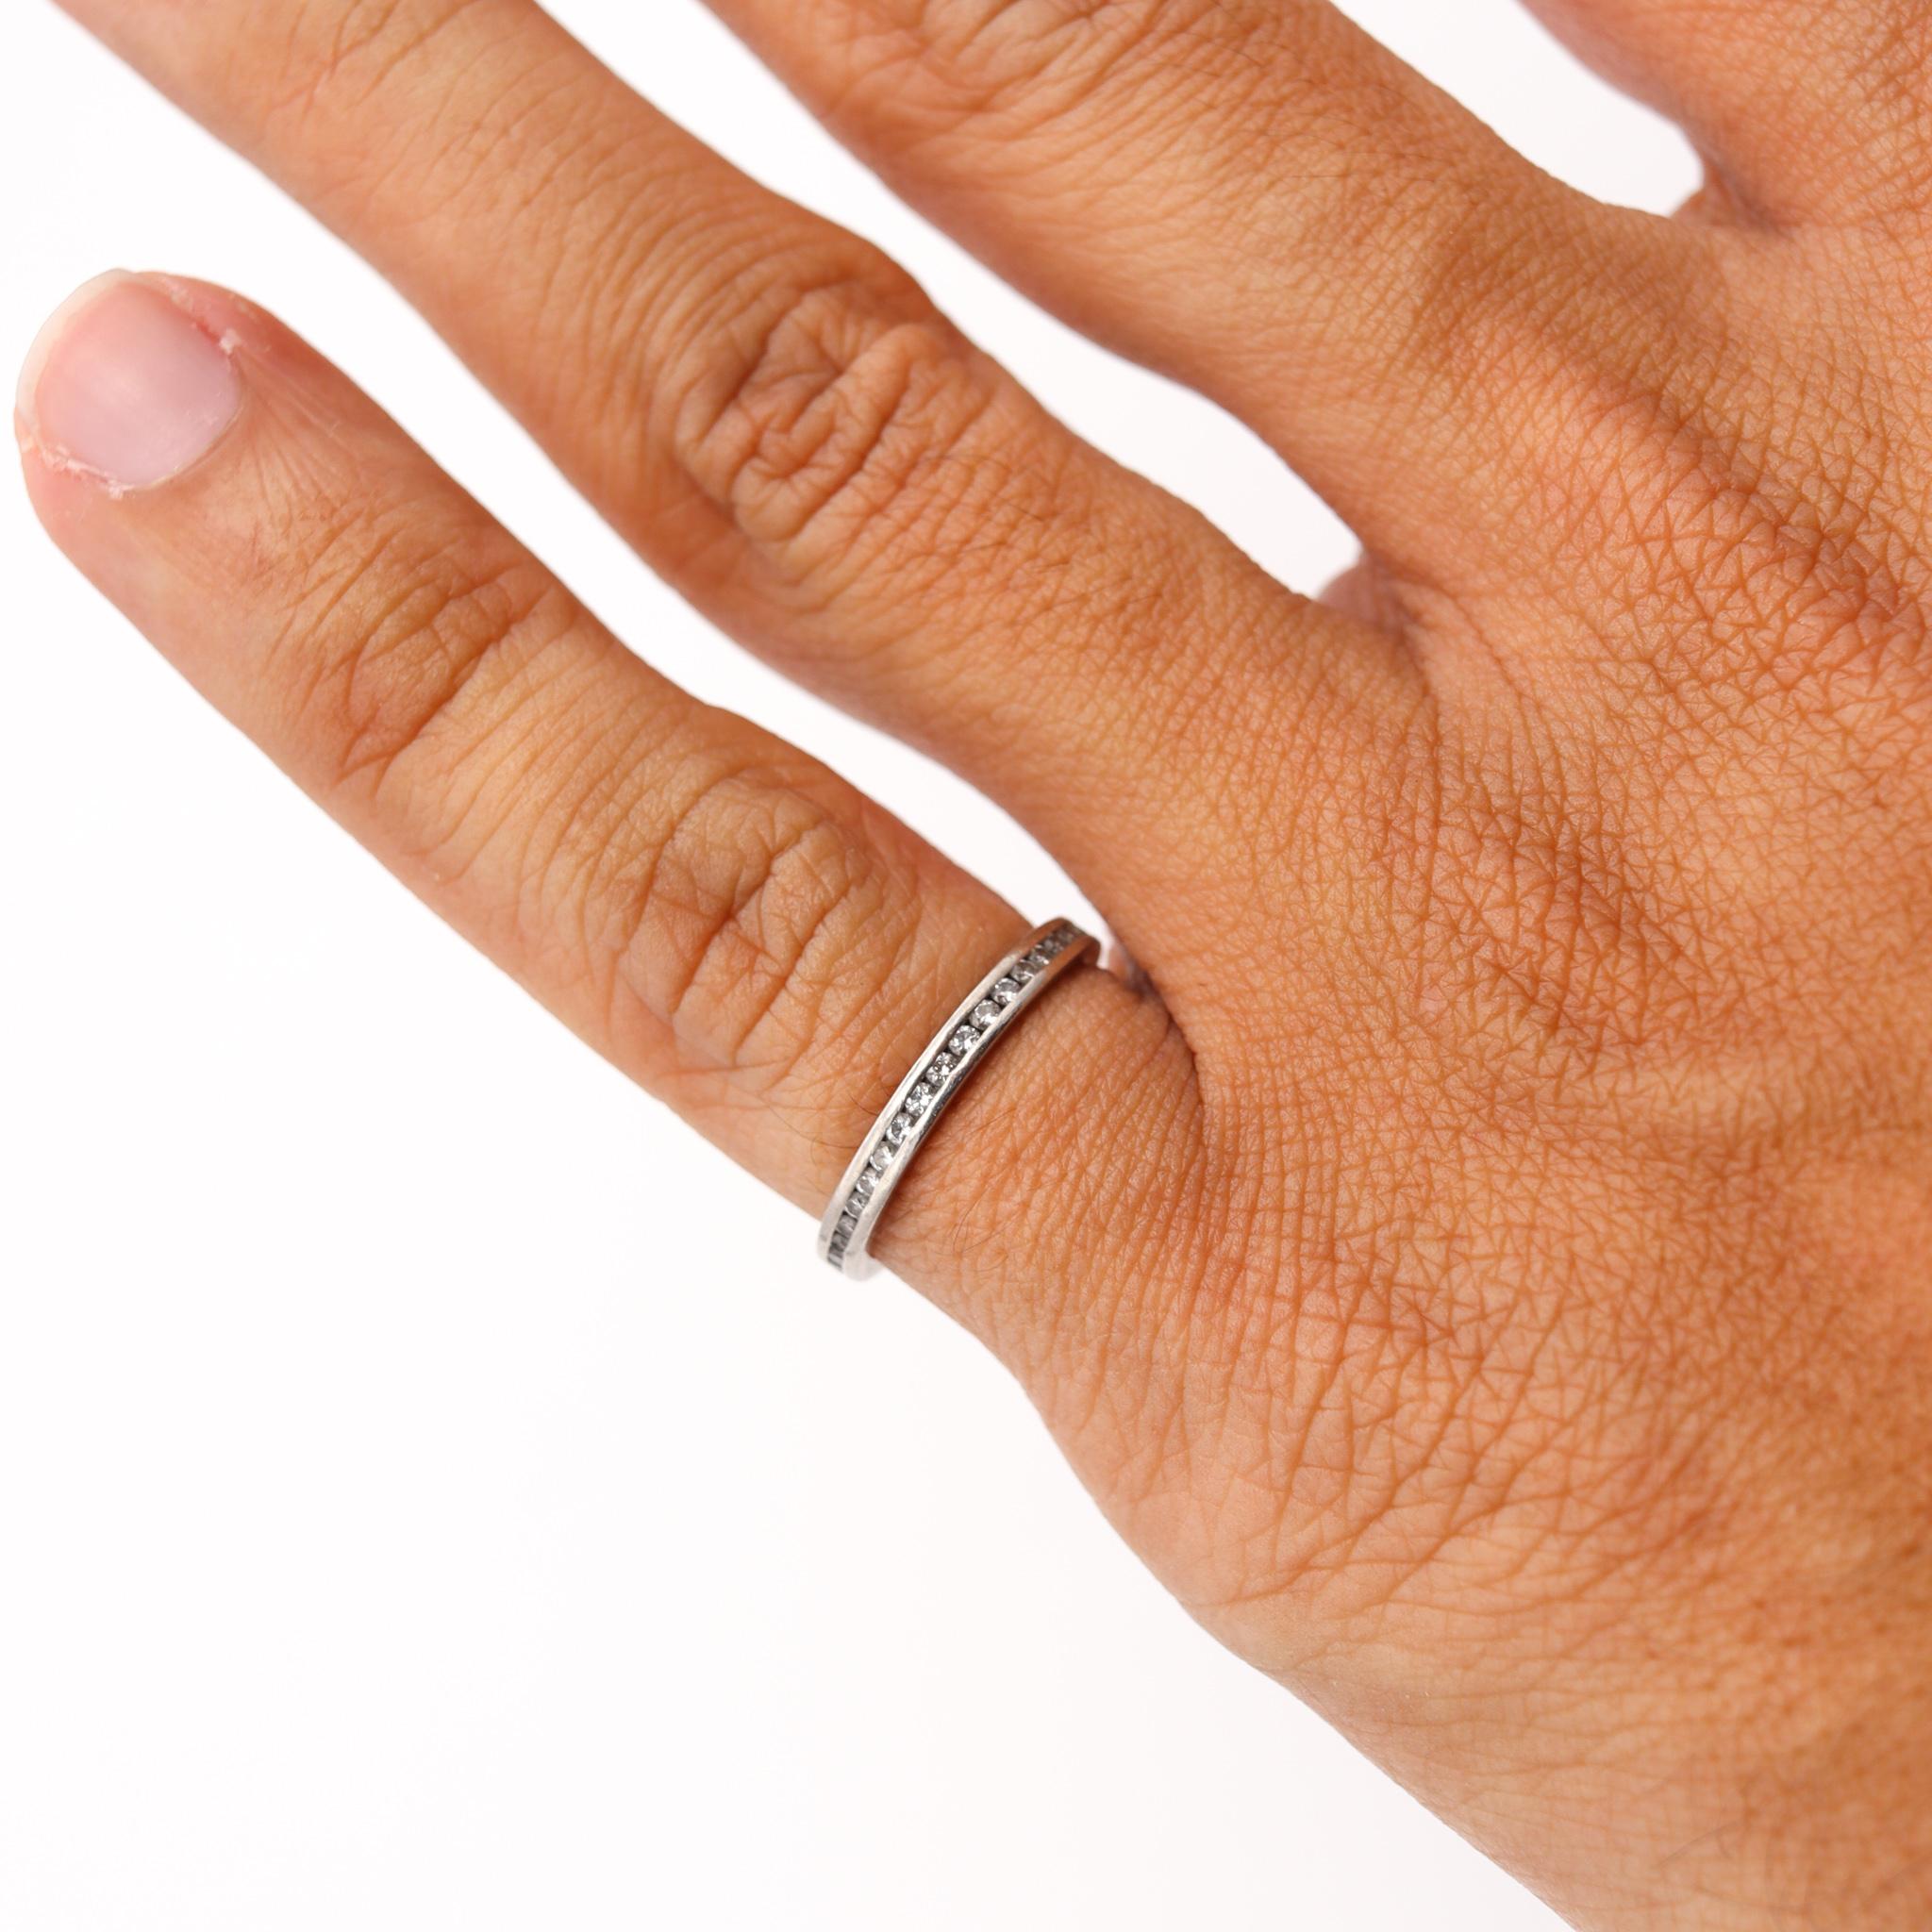 Women's Oscar Heyman New York Classic Eternity Ring in Platinum with 41 Round Diamonds For Sale